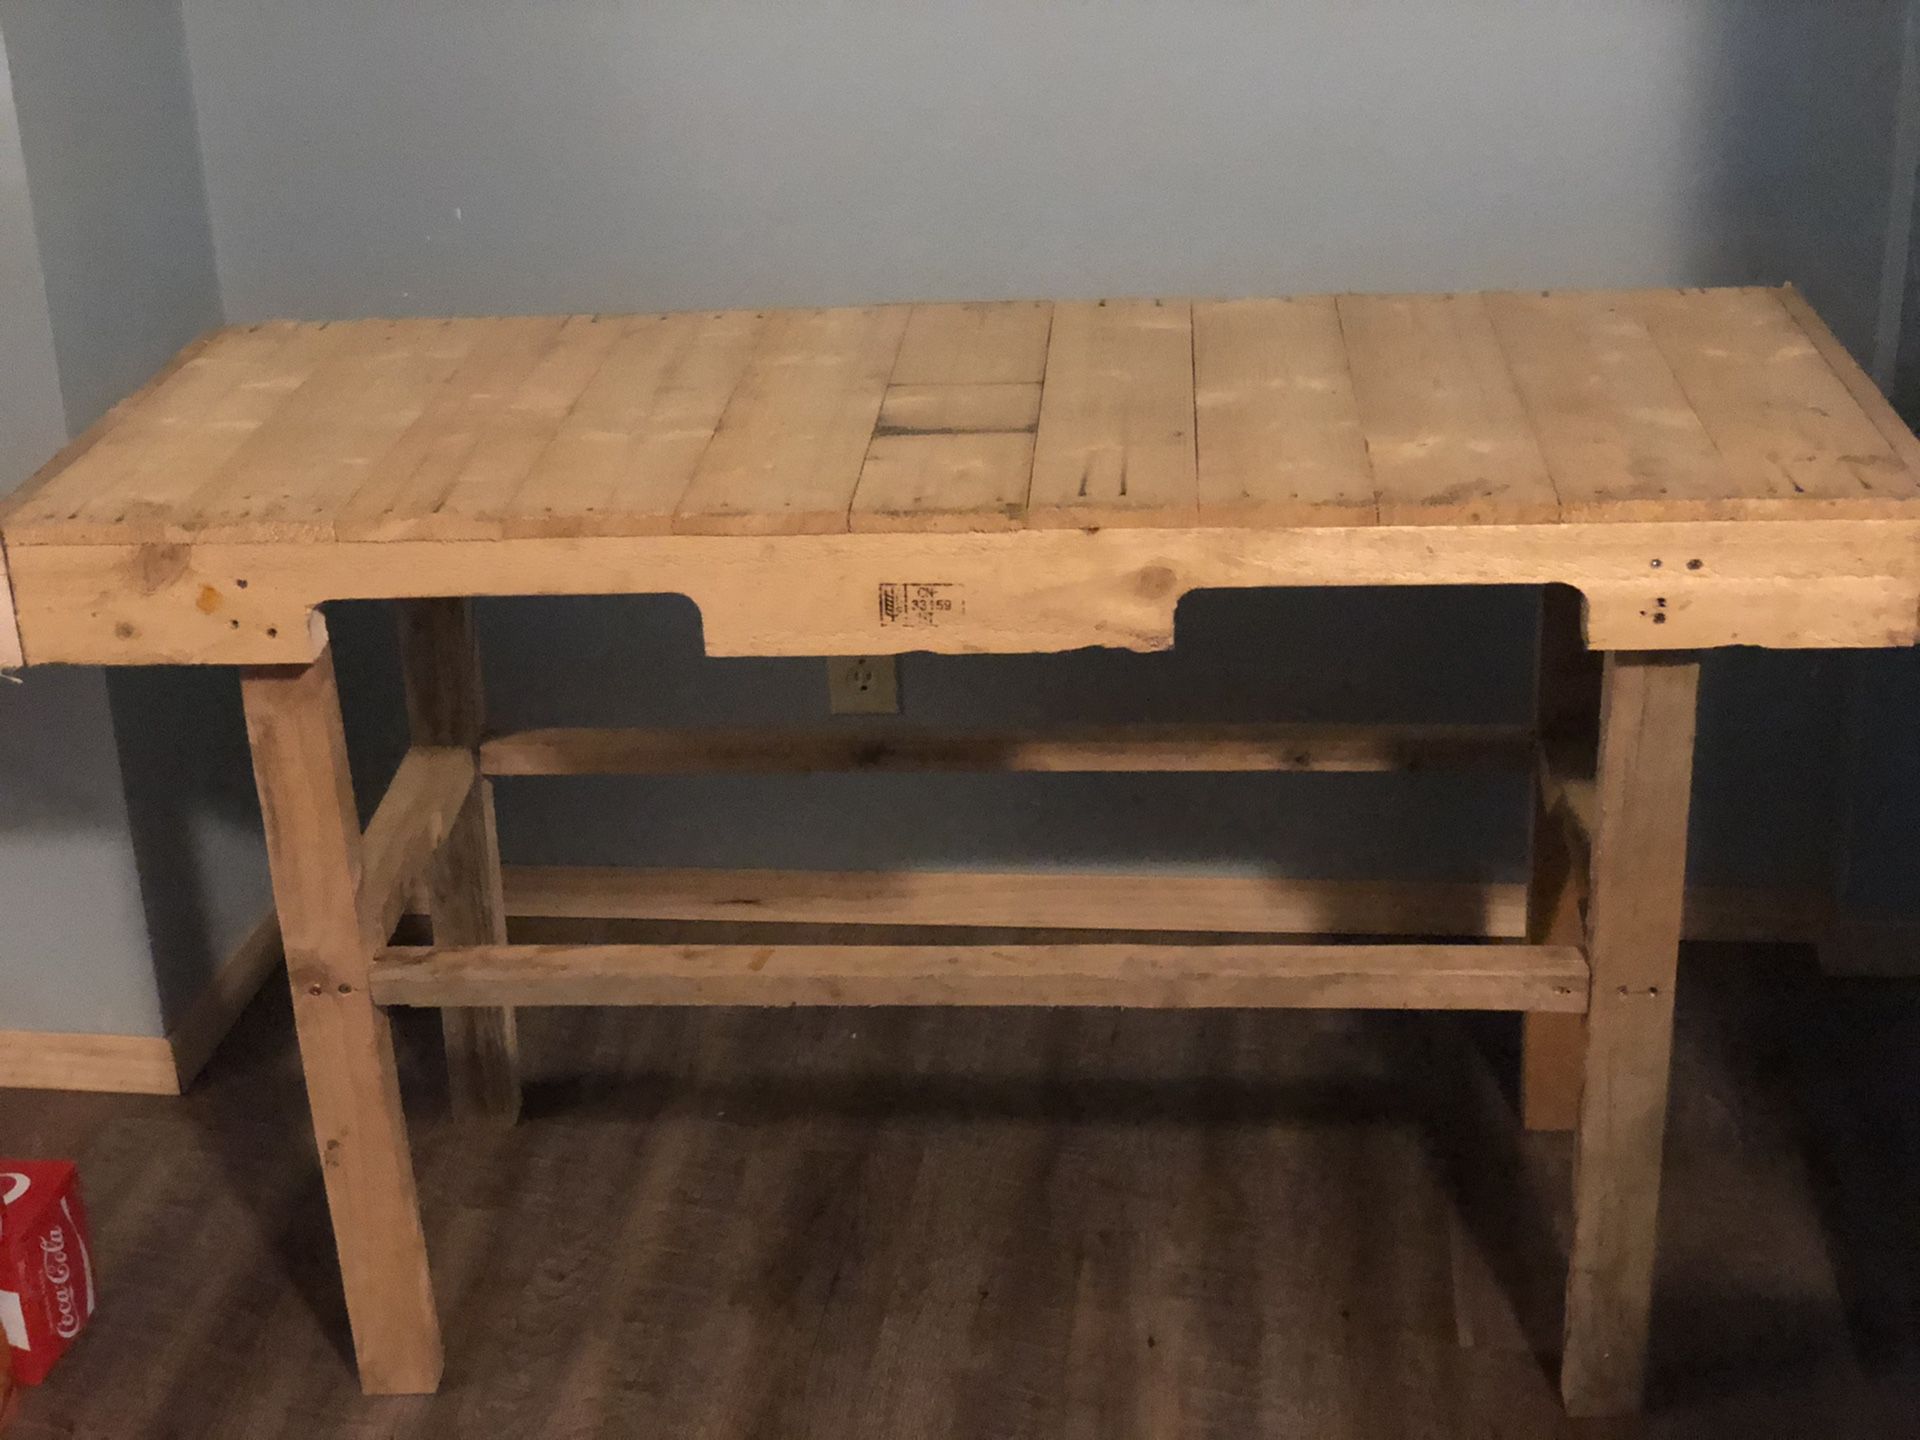 Bench,table,desk